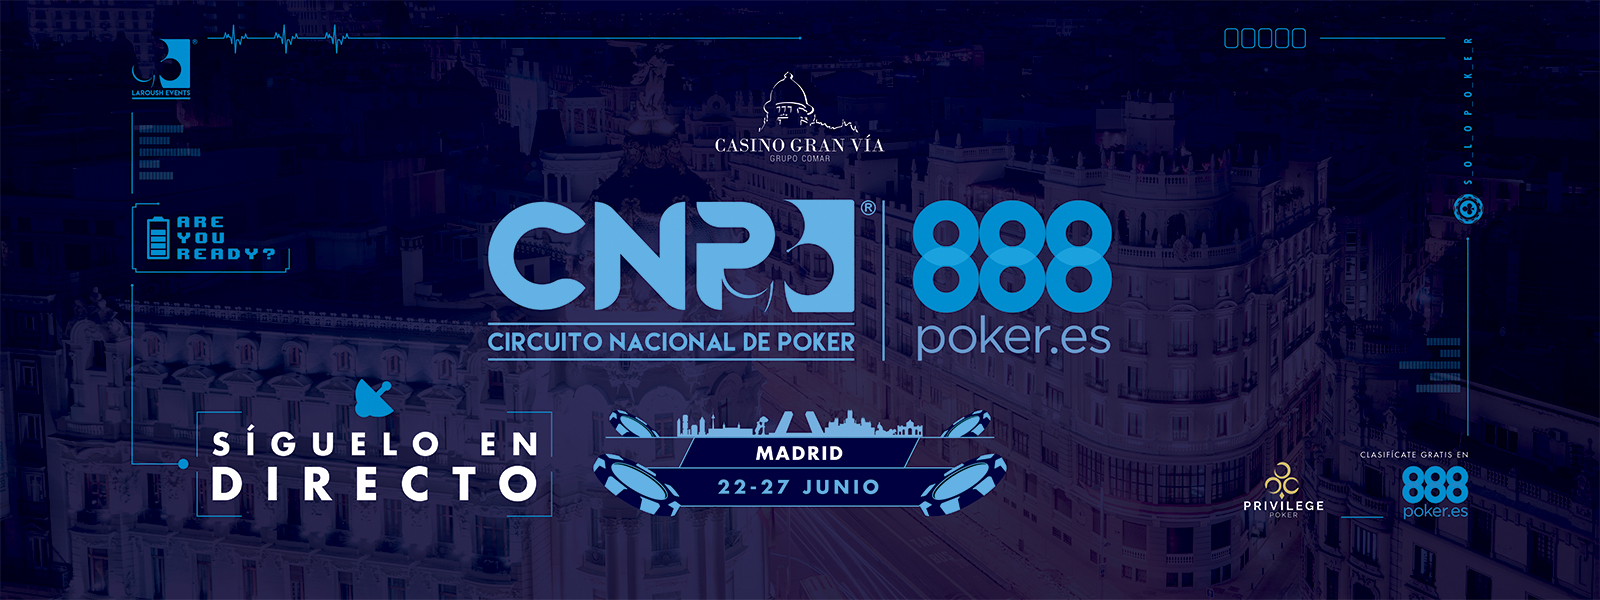 CNP888 Madrid